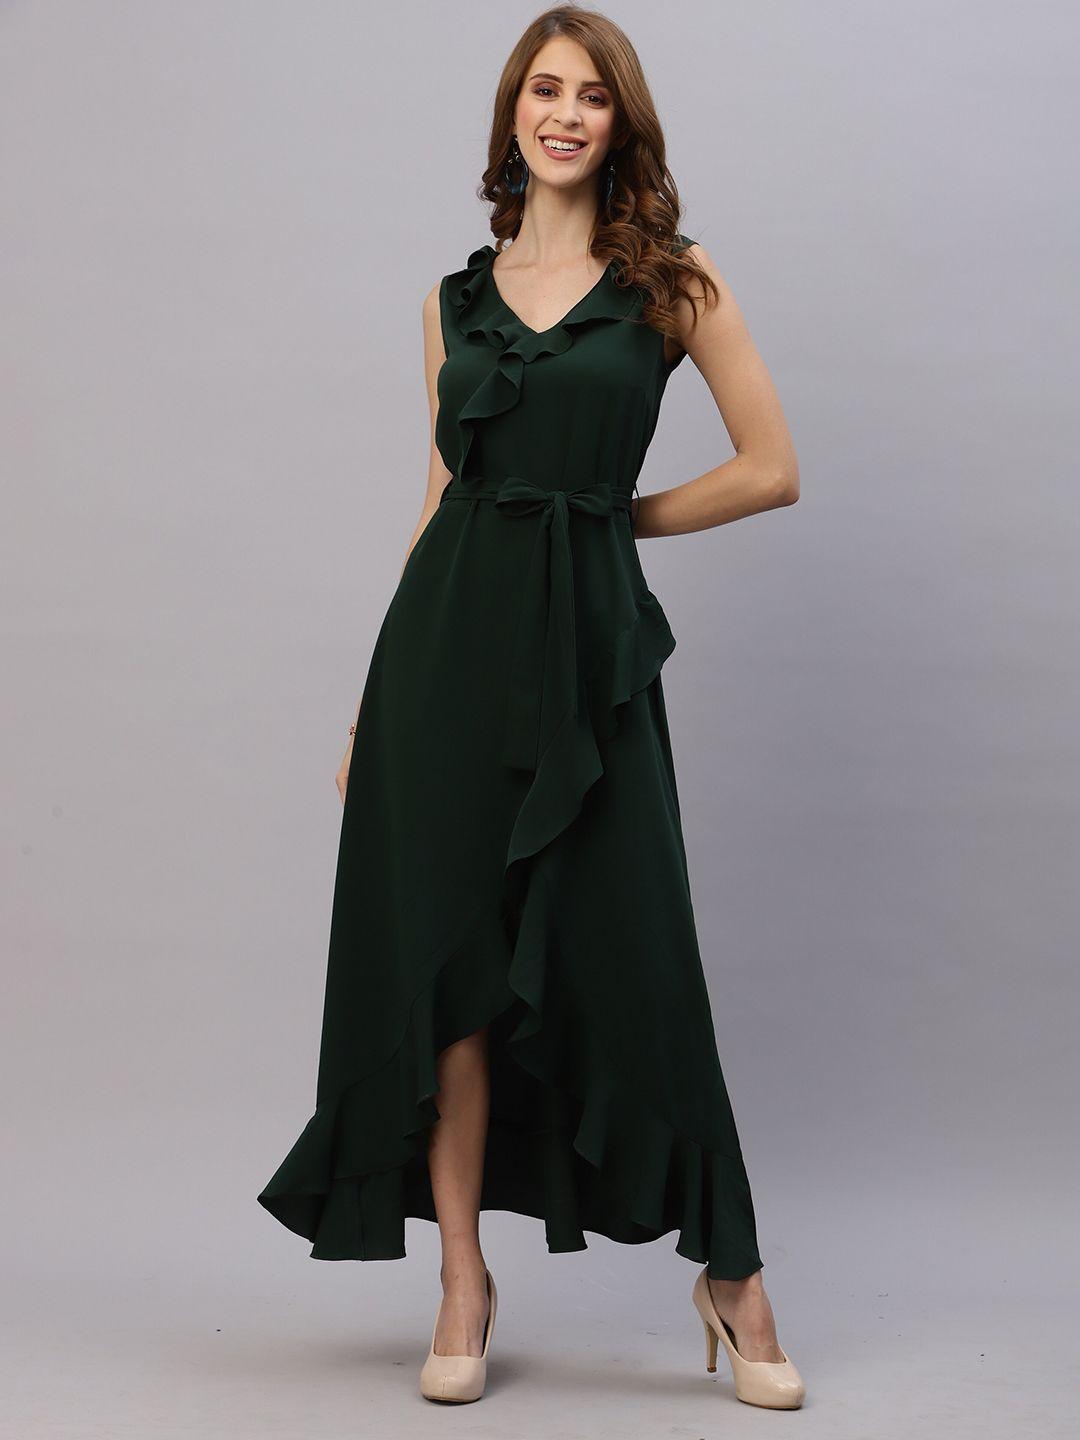 raassio green crepe maxi dress